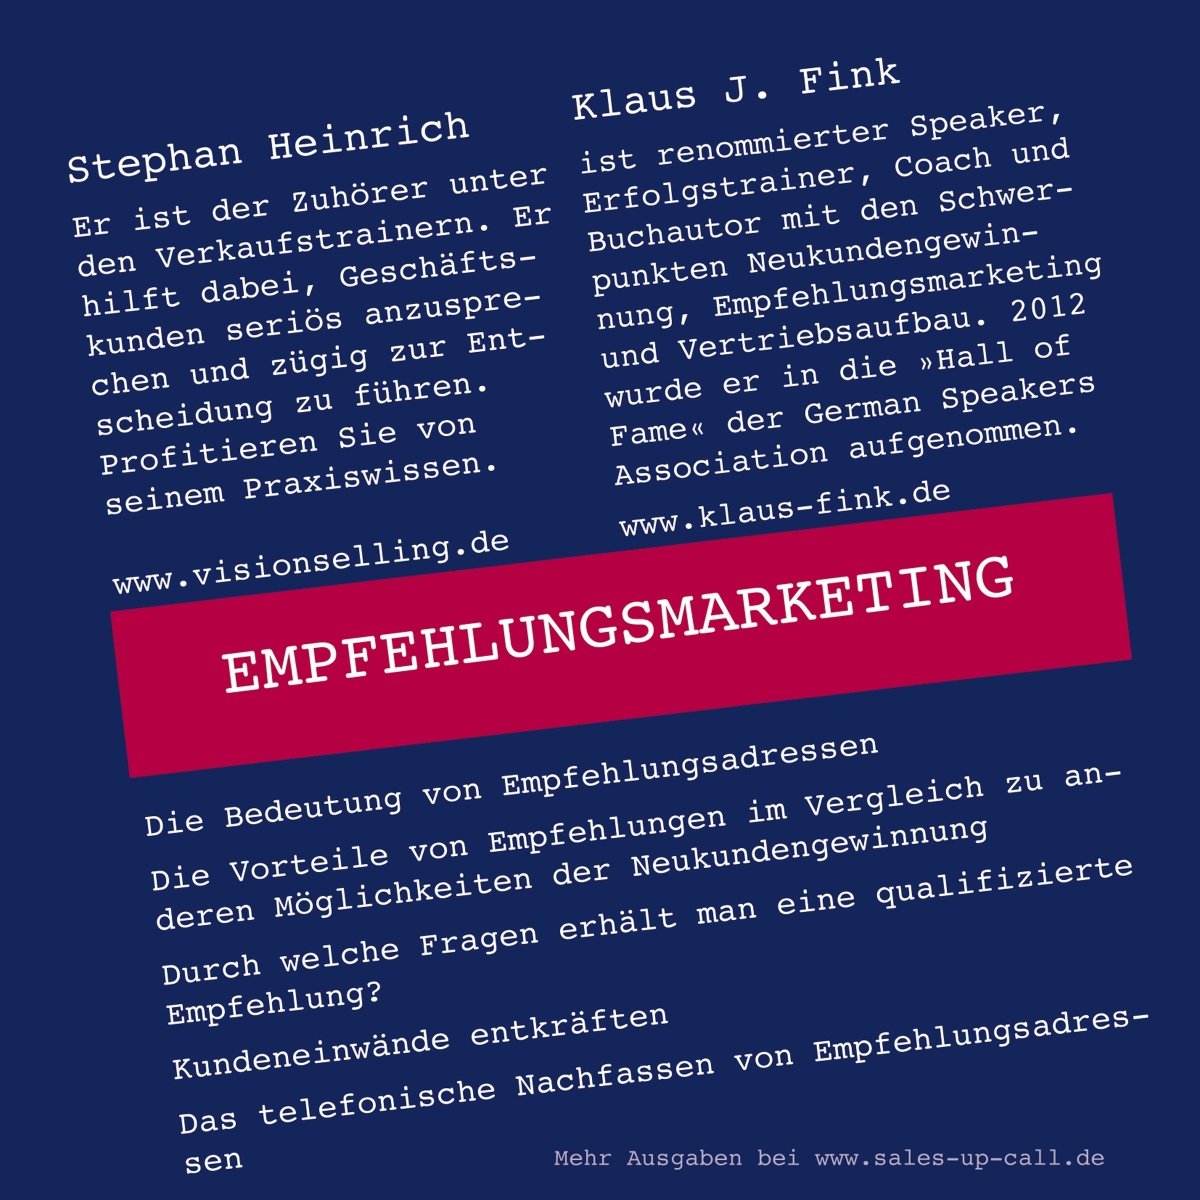 Empfehlungsmarketing - Sales-up-Call - Stephan Heinrich